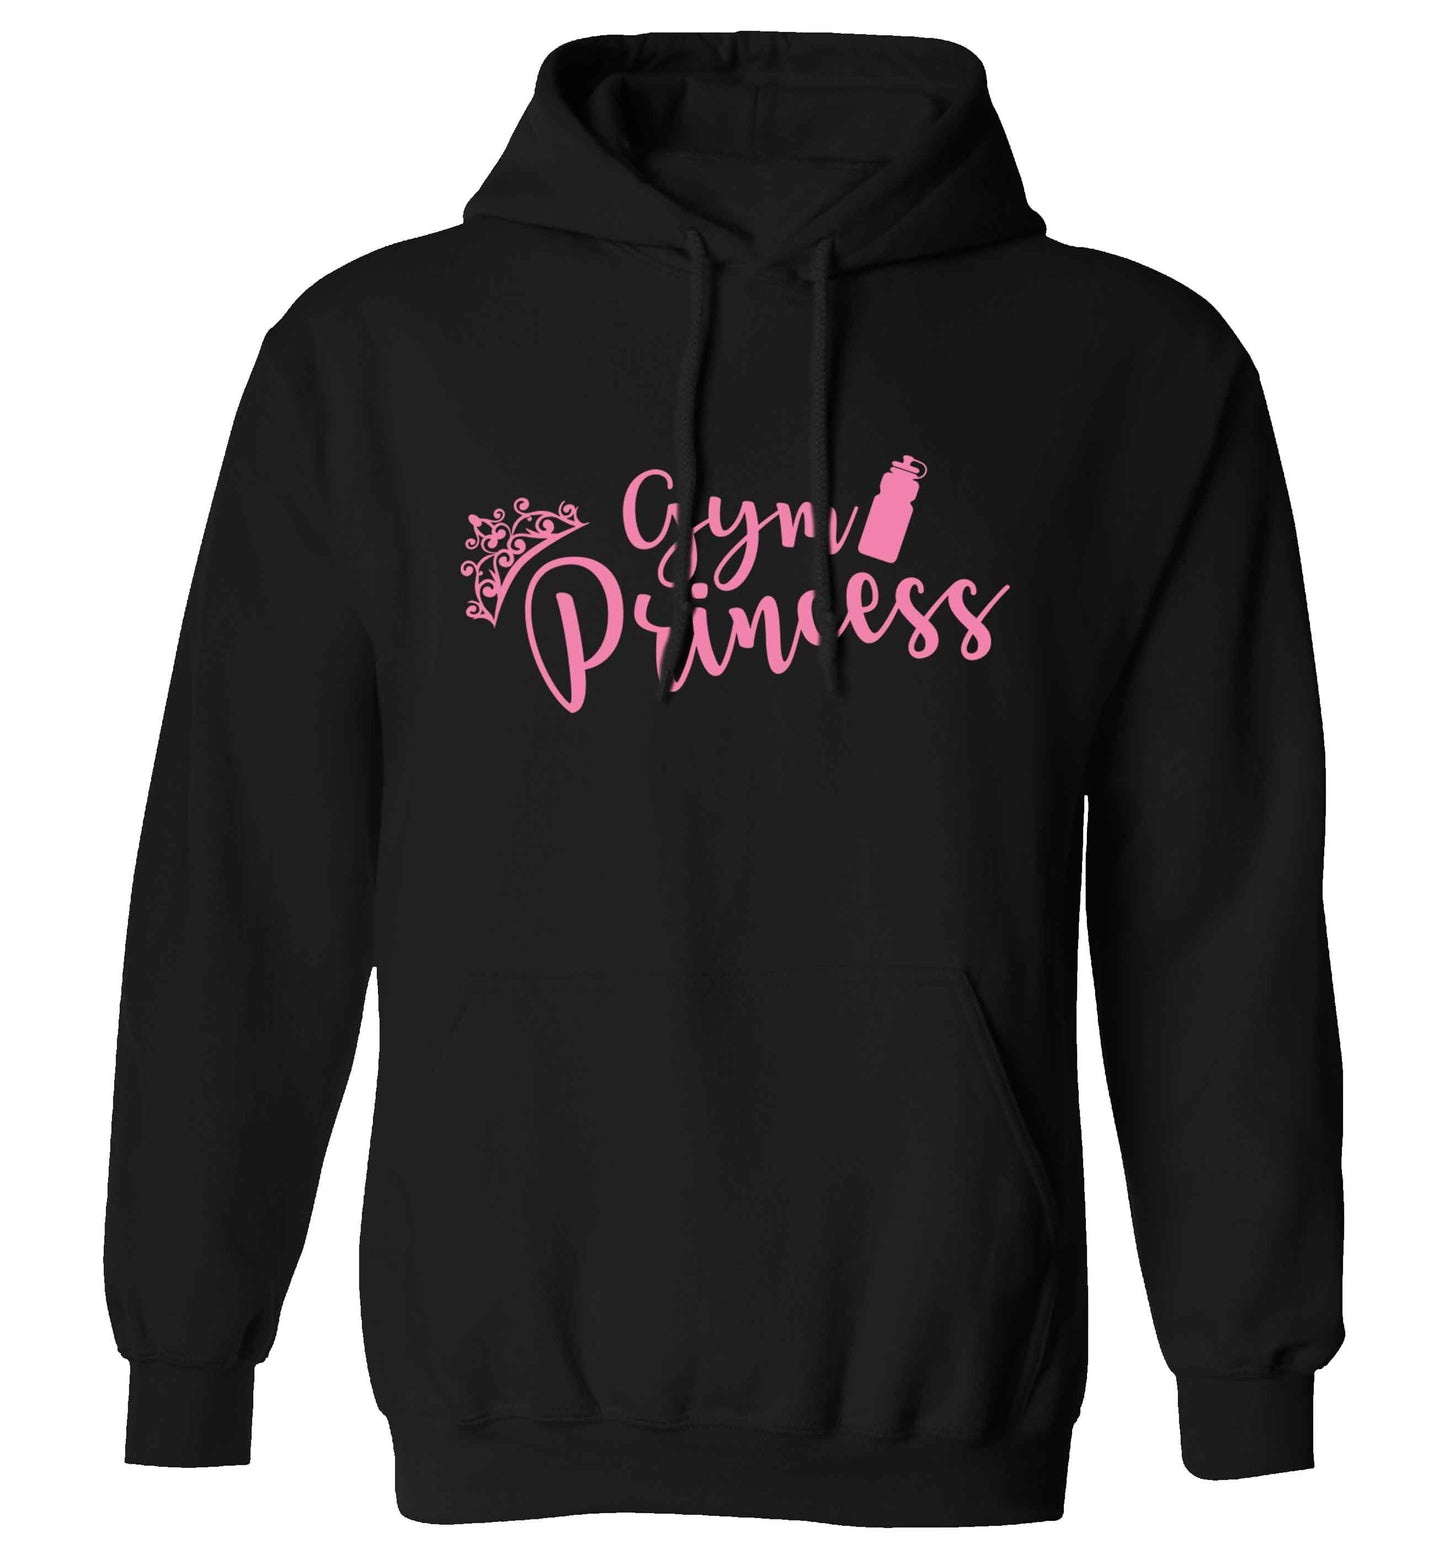 Gym princess adults unisex black hoodie 2XL